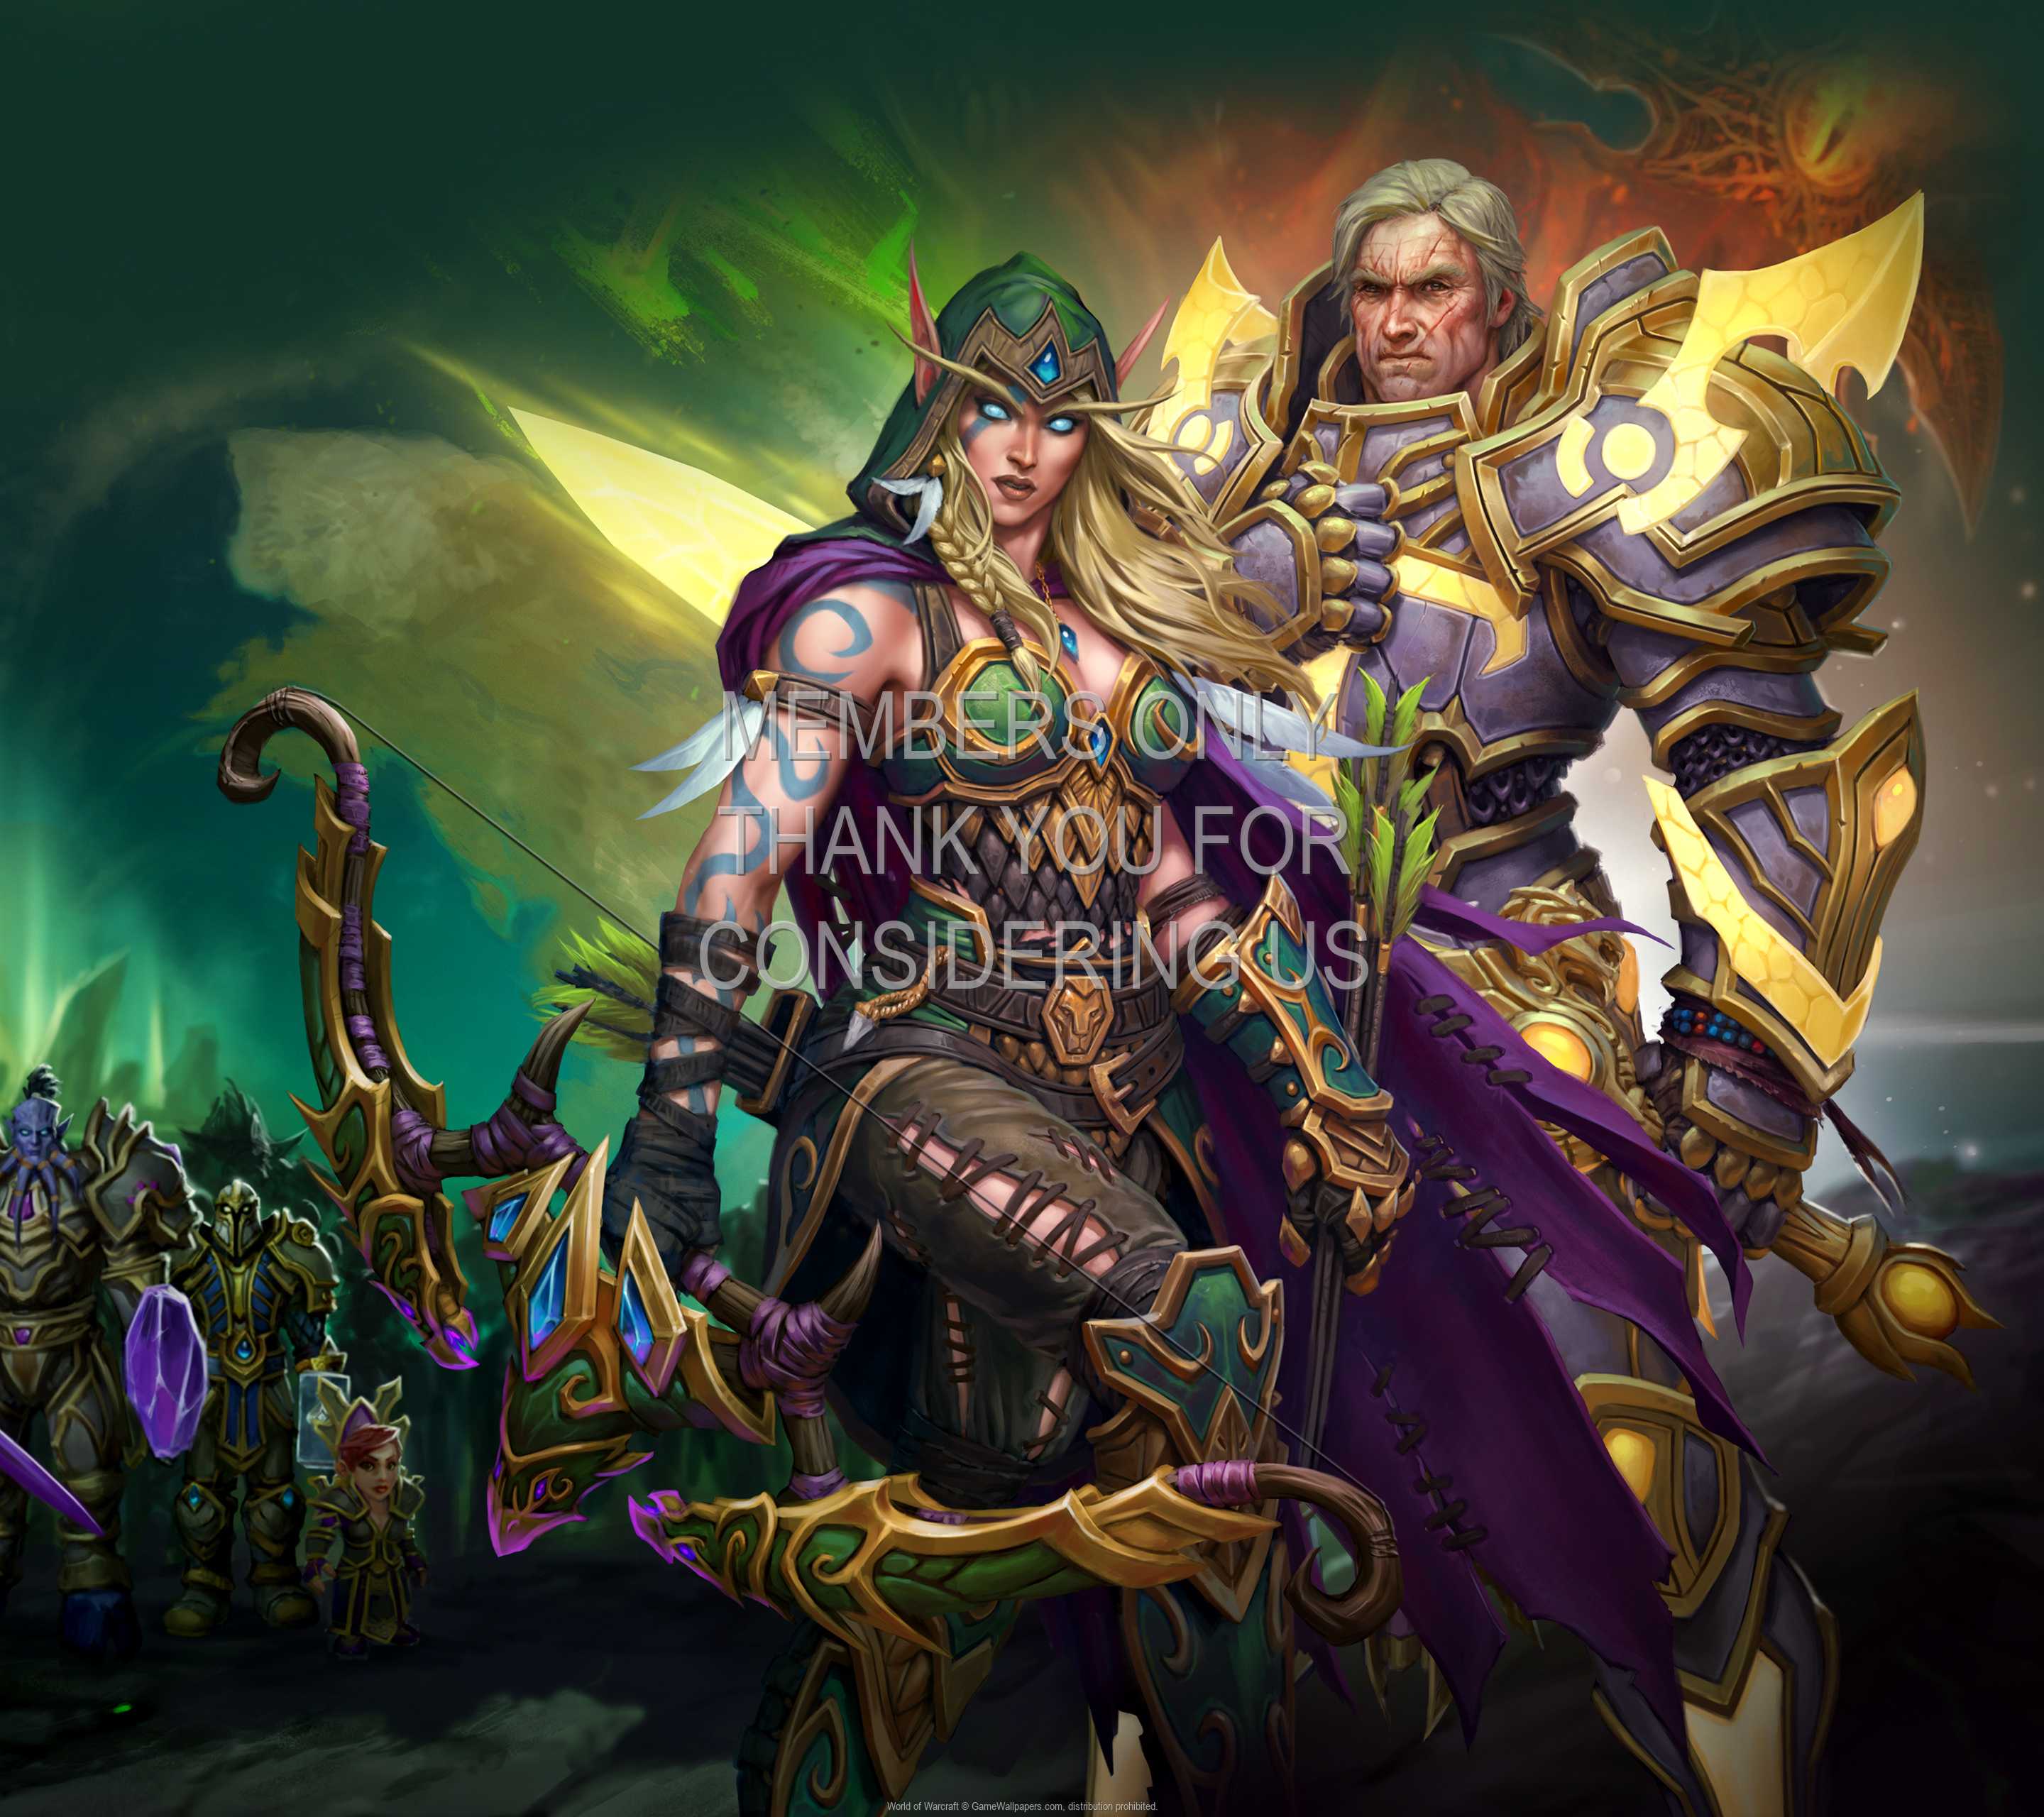 World of Warcraft 1440p Horizontal Mobile wallpaper or background 16